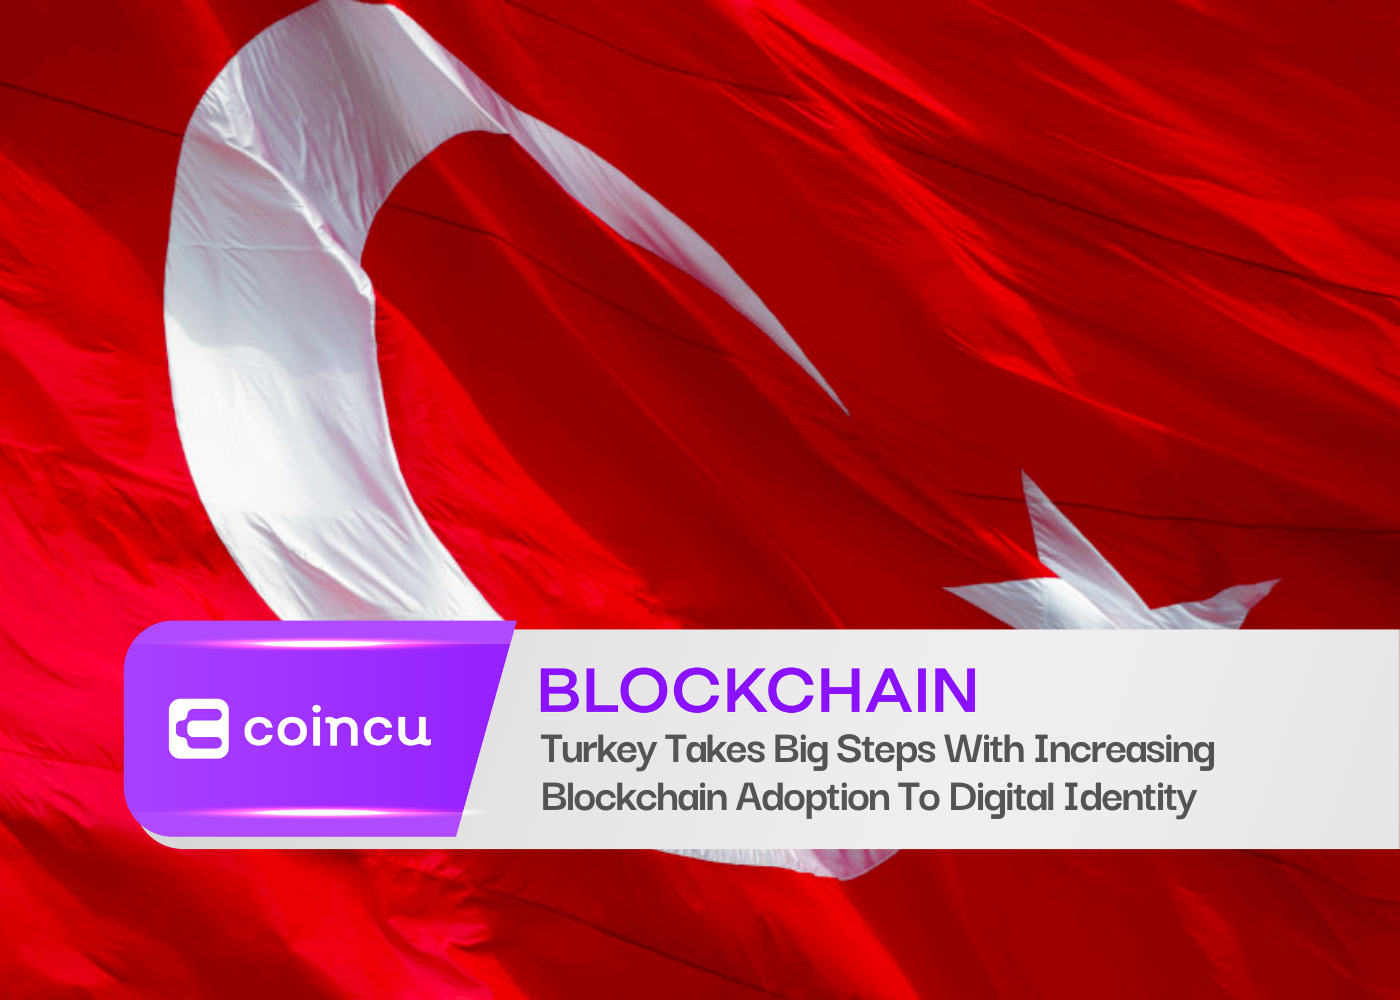 Turkey Takes Big Steps With Increasing Blockchain Adoption To Digital Identity